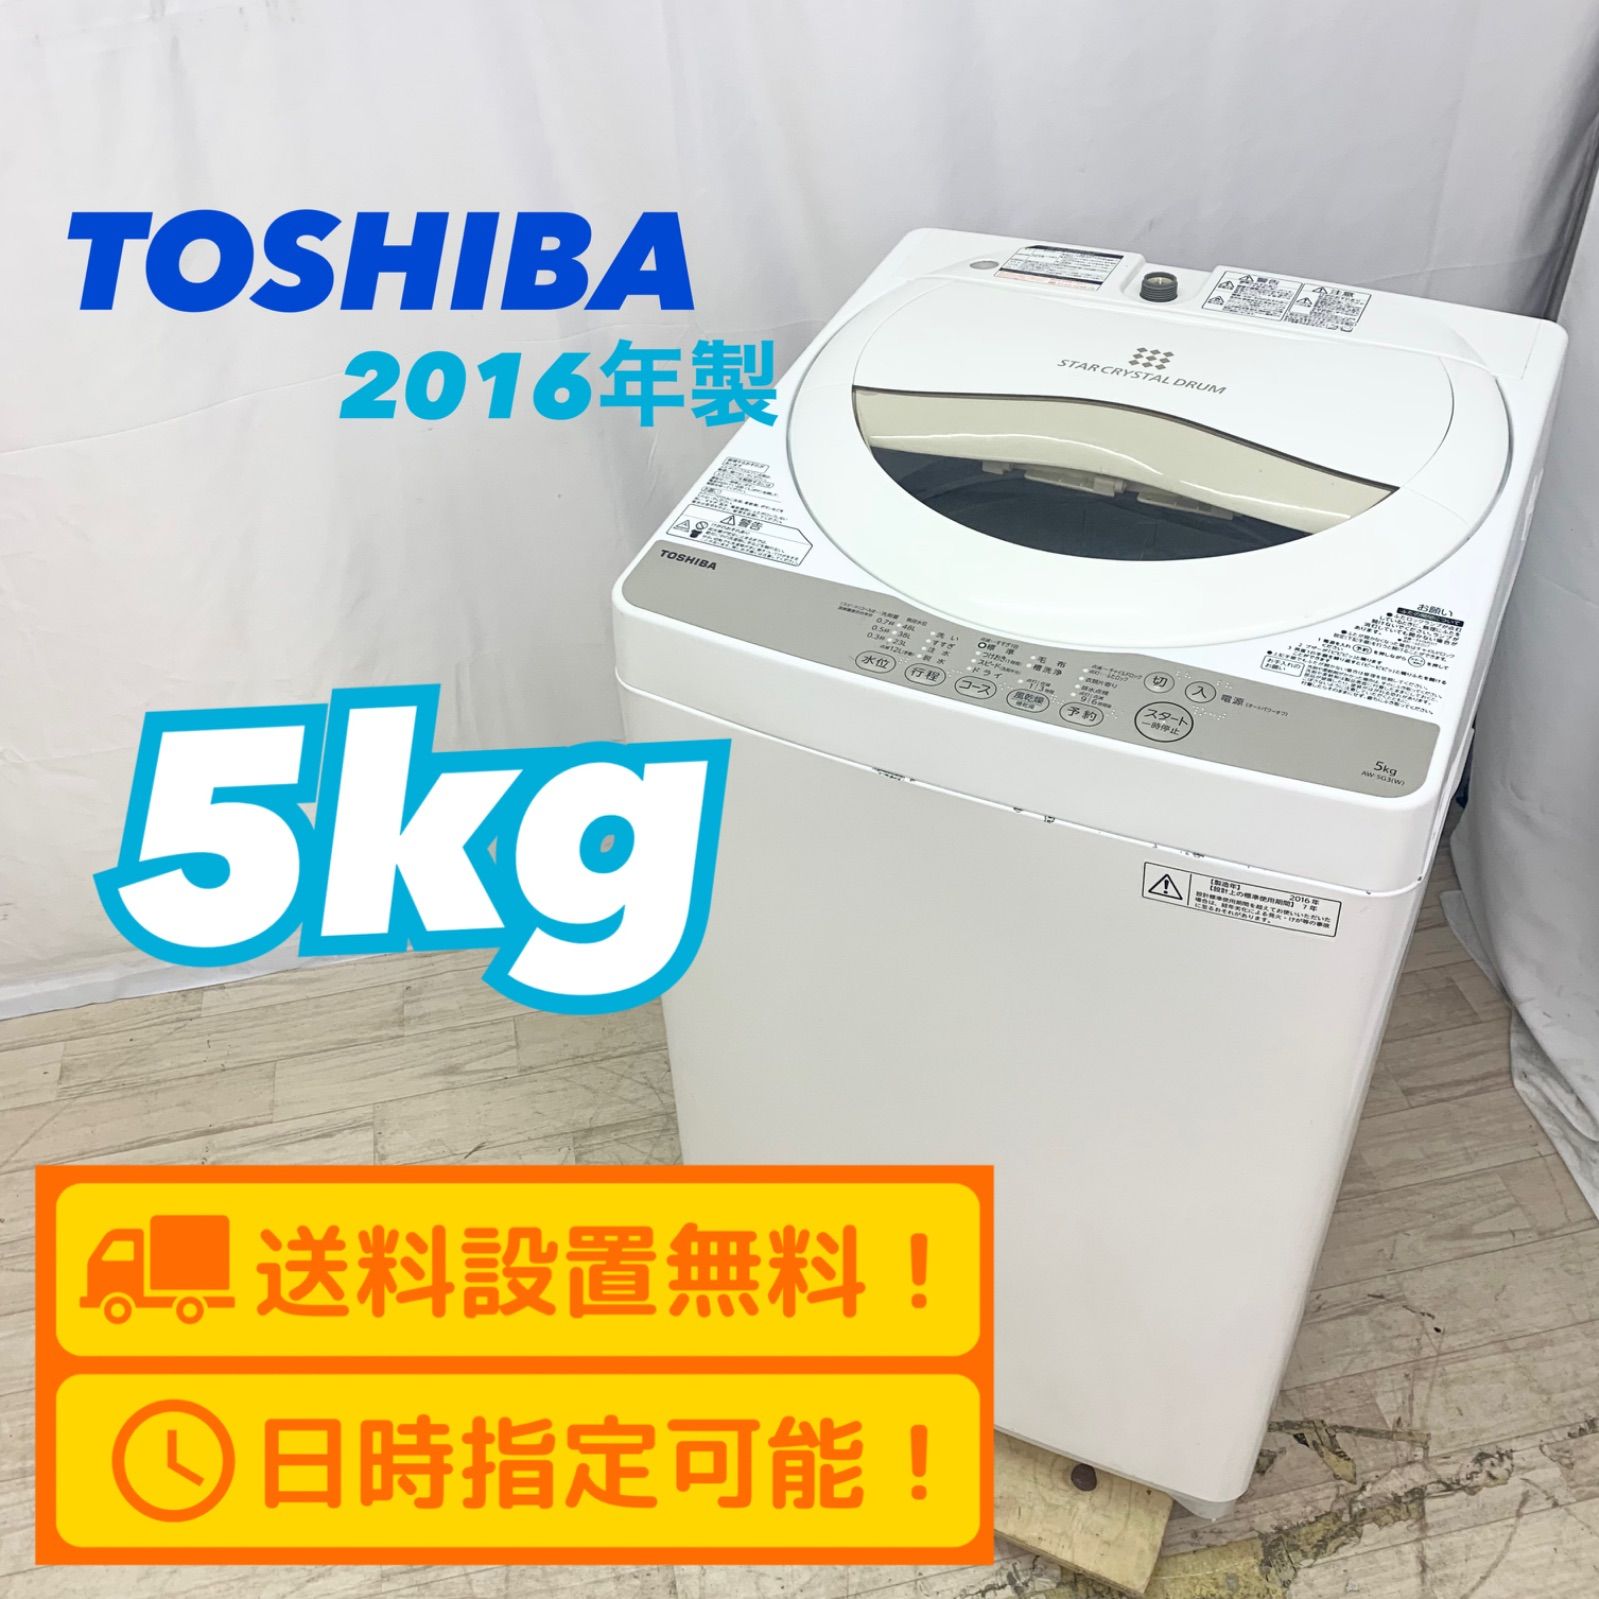 POPO様専用 TOSHIBA 東芝 5kg 洗濯機 AW-5G3 2016年製 白 一人暮らし